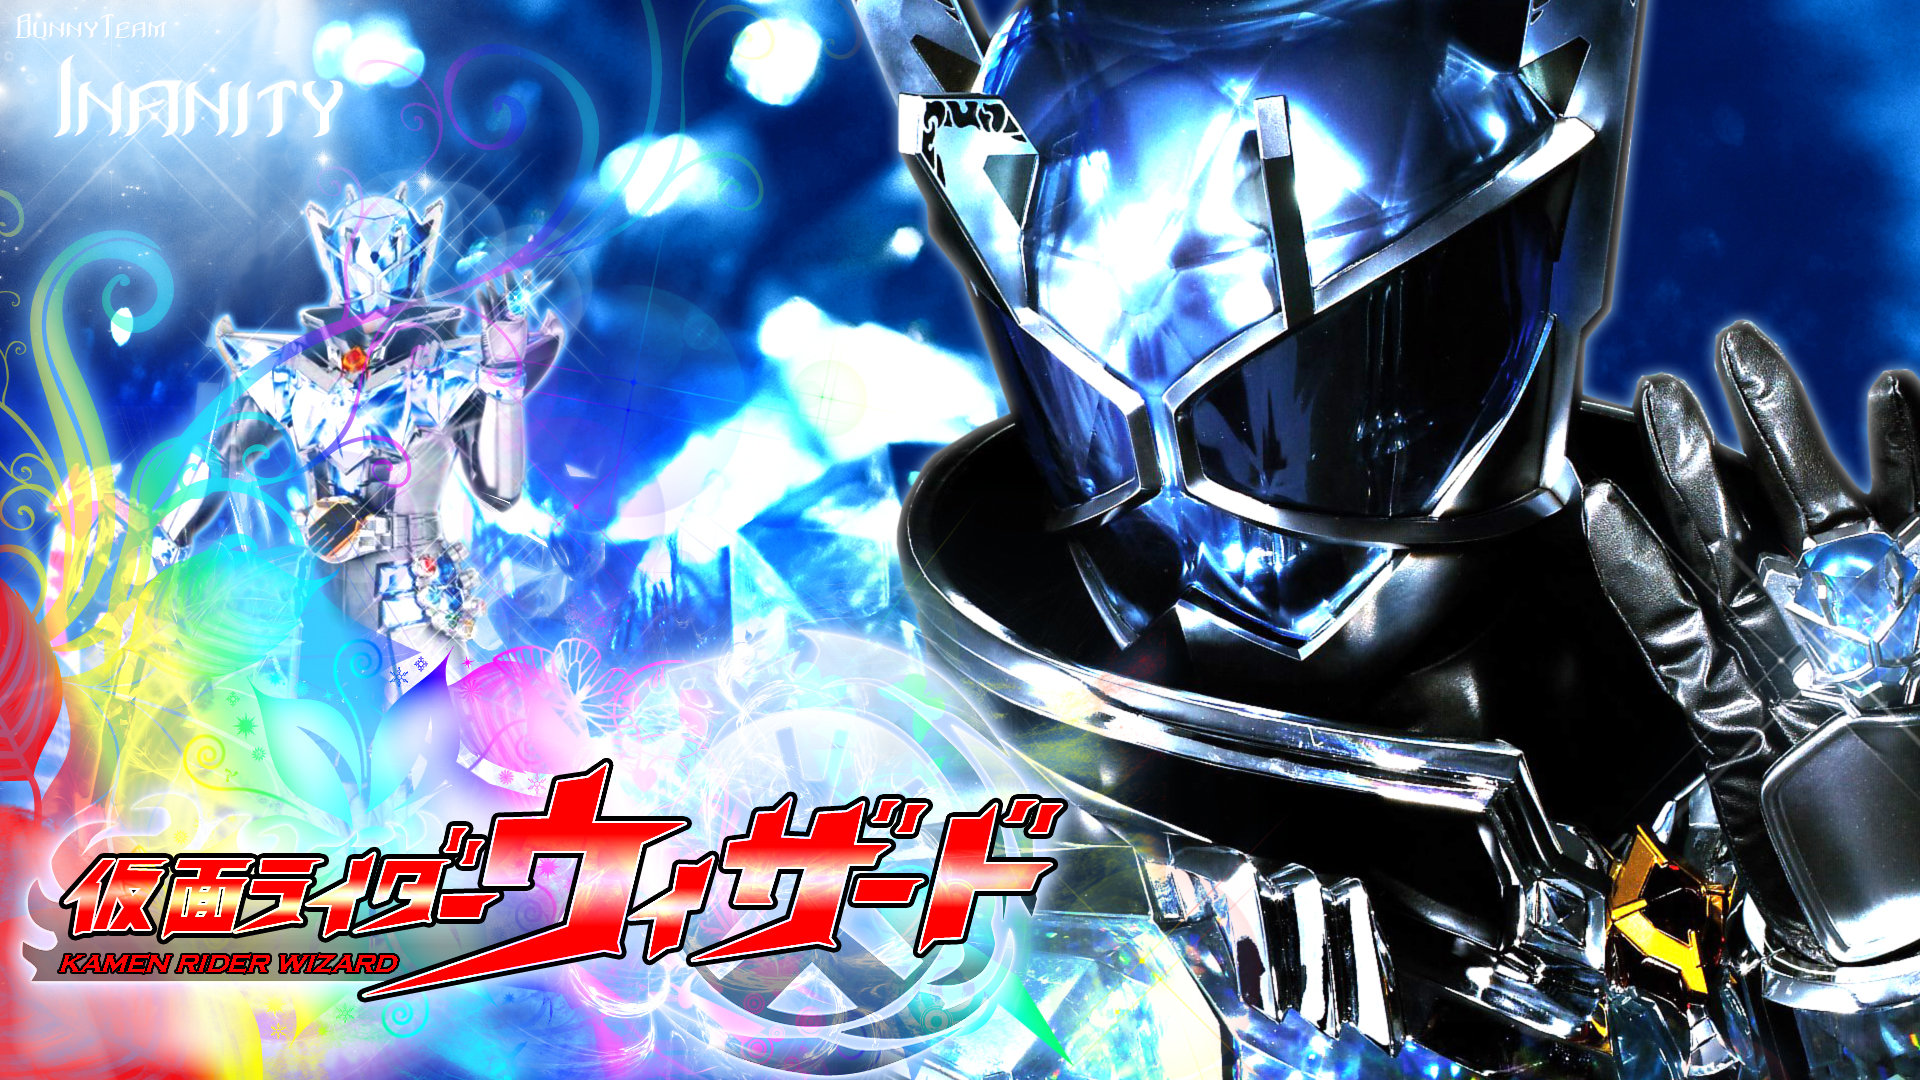 Download 1080p Kamen Rider desktop background ID:240052 for free